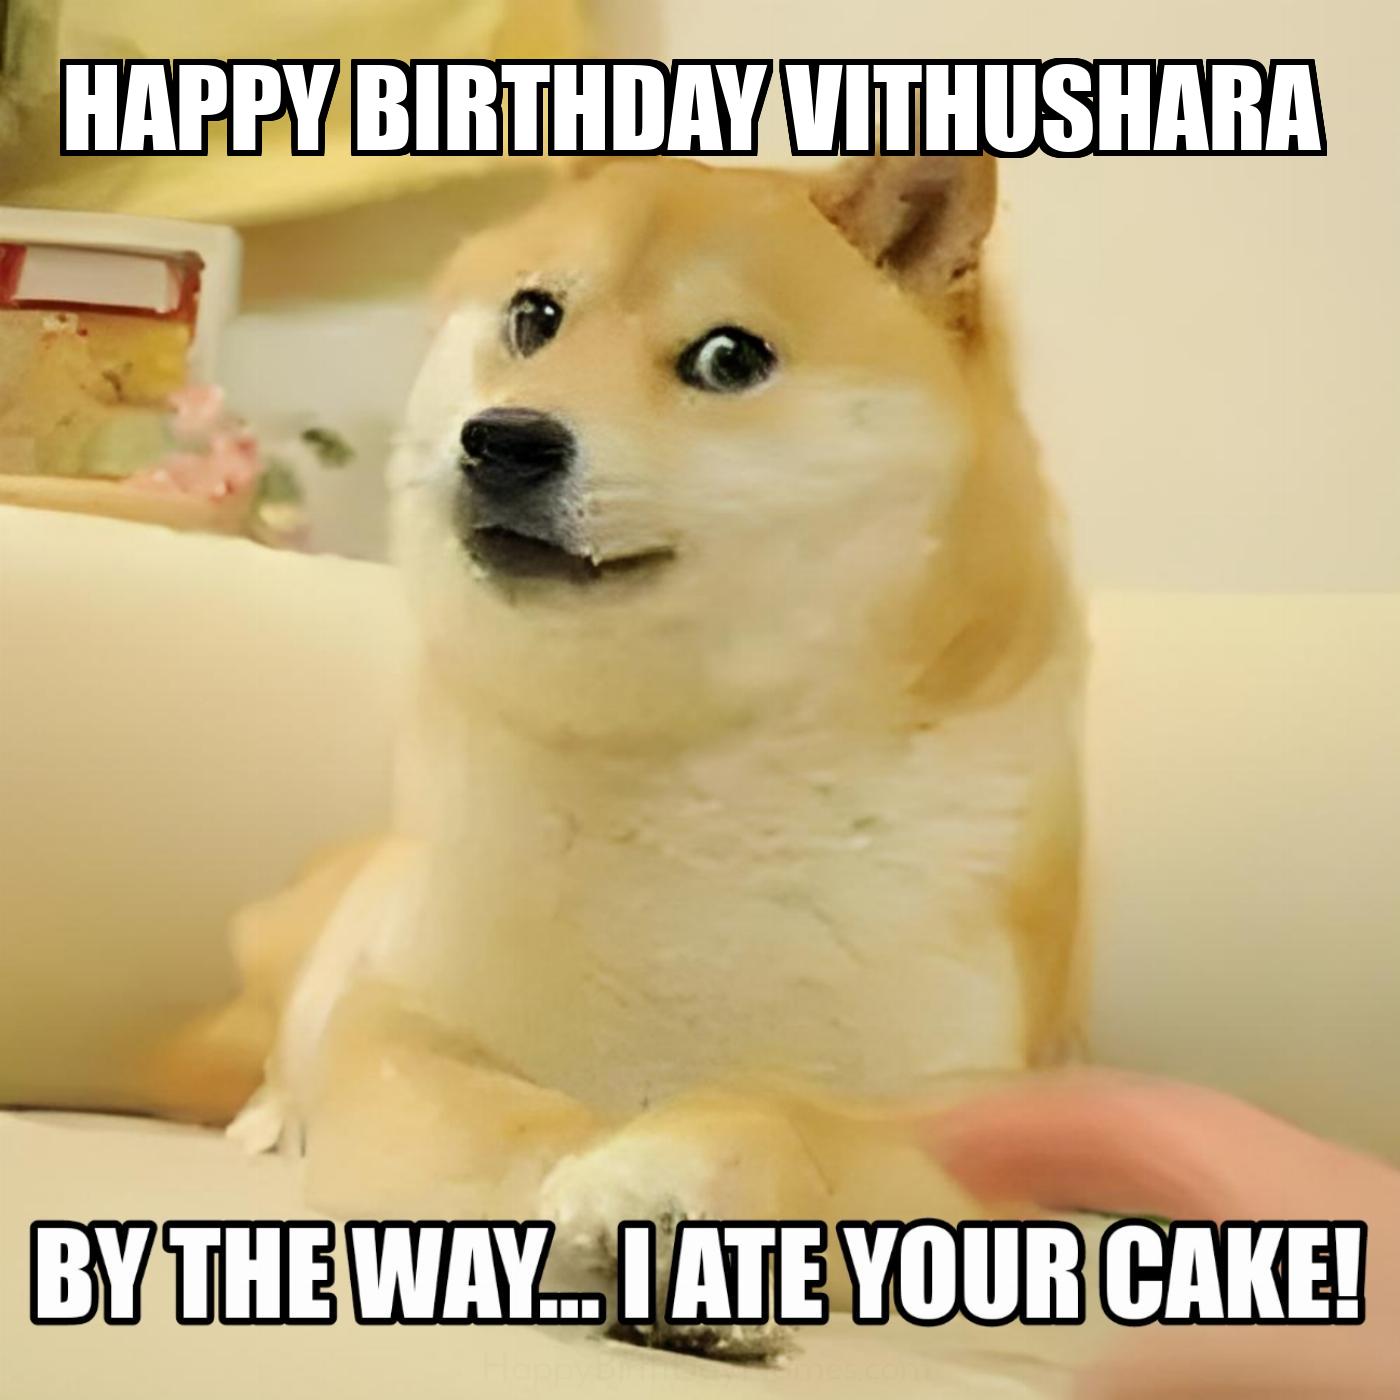 Happy Birthday Vithushara BTW I Ate Your Cake Meme